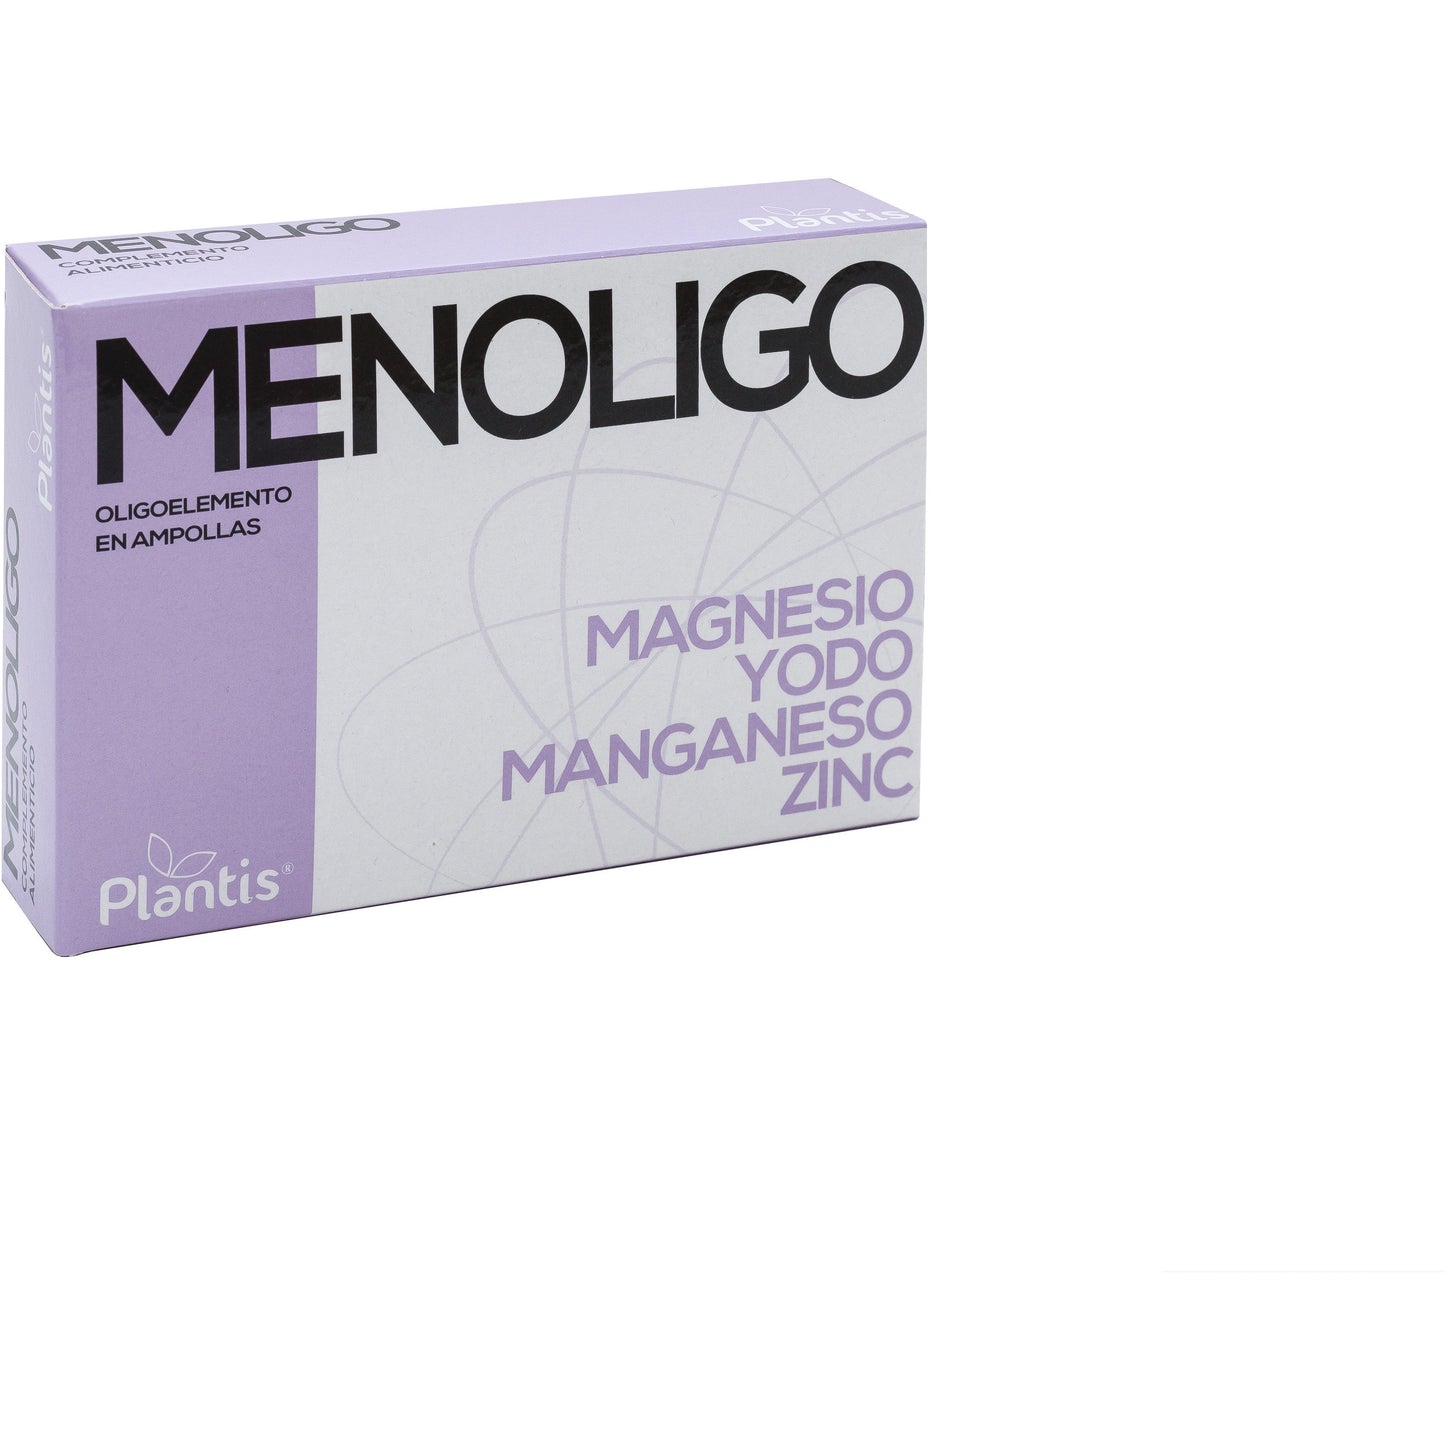 Menoligo 20 ampollas | Artesania Agricola - Dietetica Ferrer